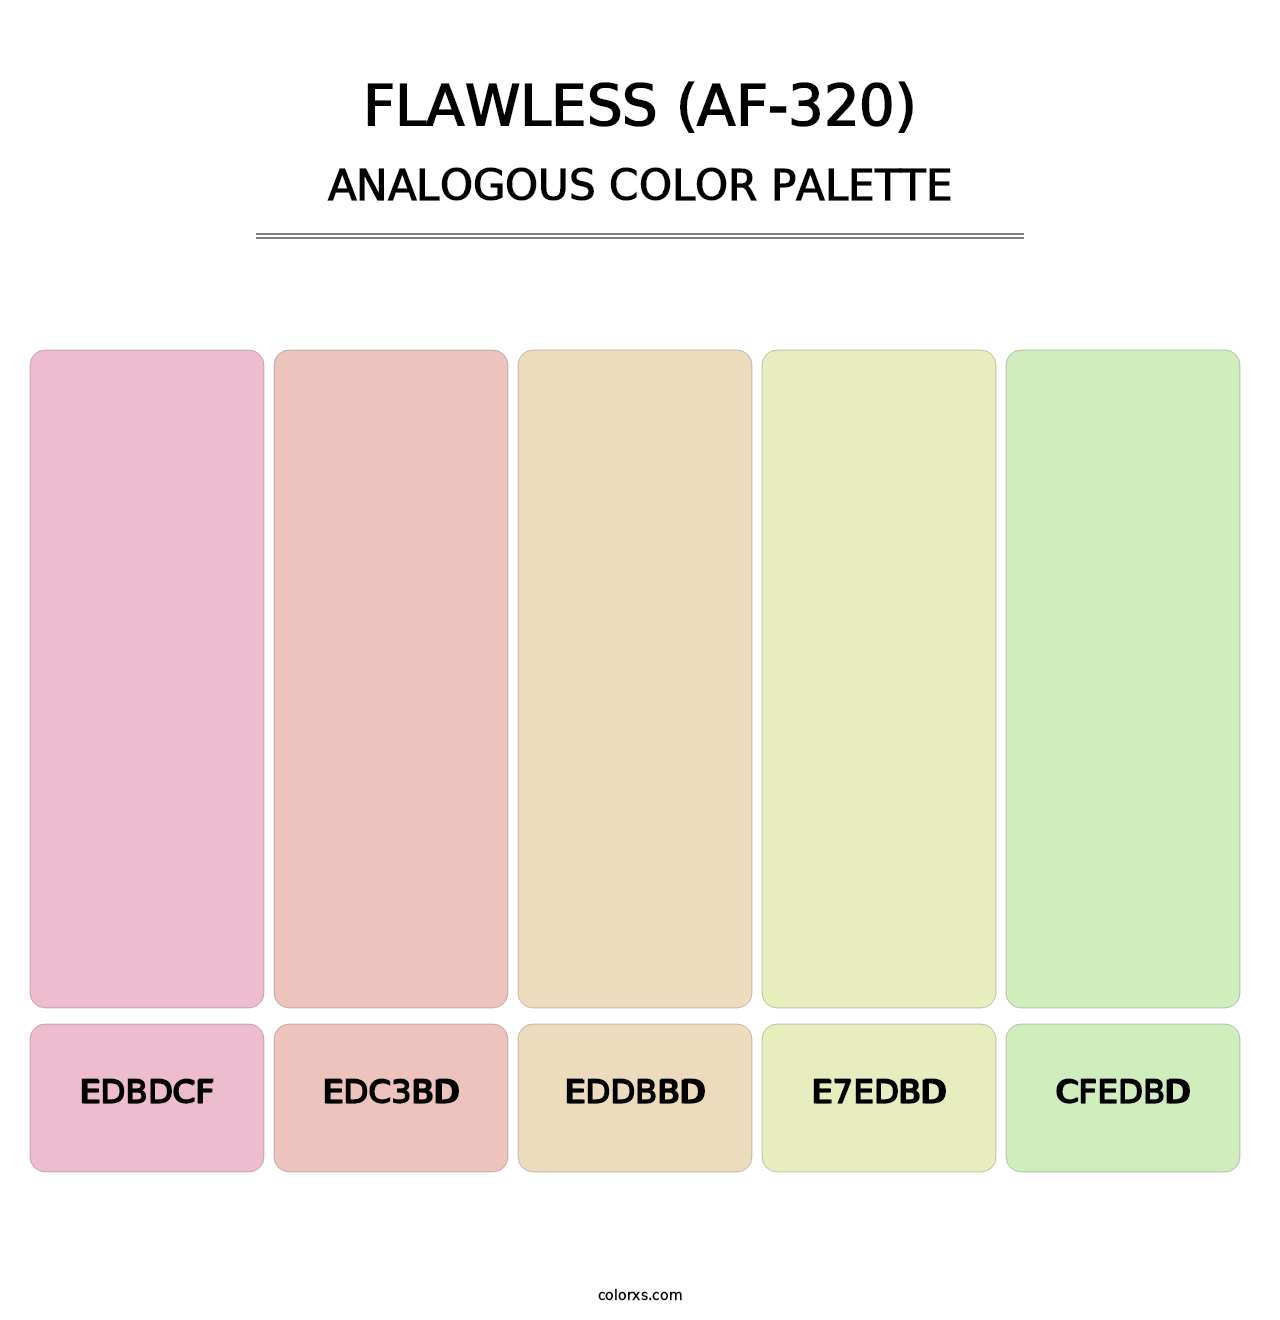 Flawless (AF-320) - Analogous Color Palette